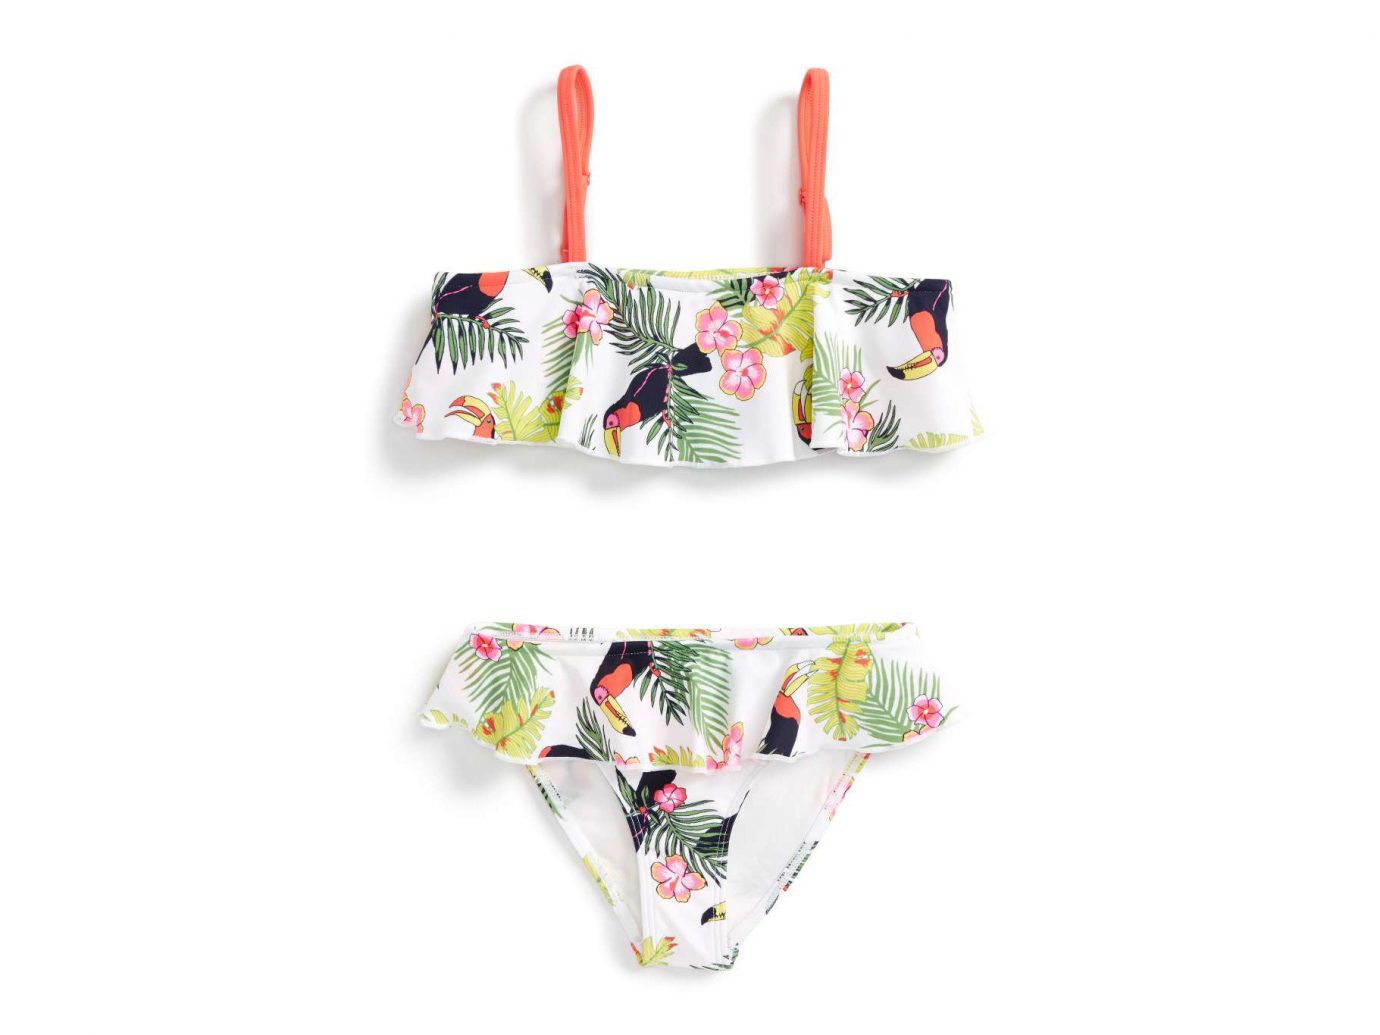 Style + Design undergarment product briefs underpants lingerie swimwear swimsuit bottom